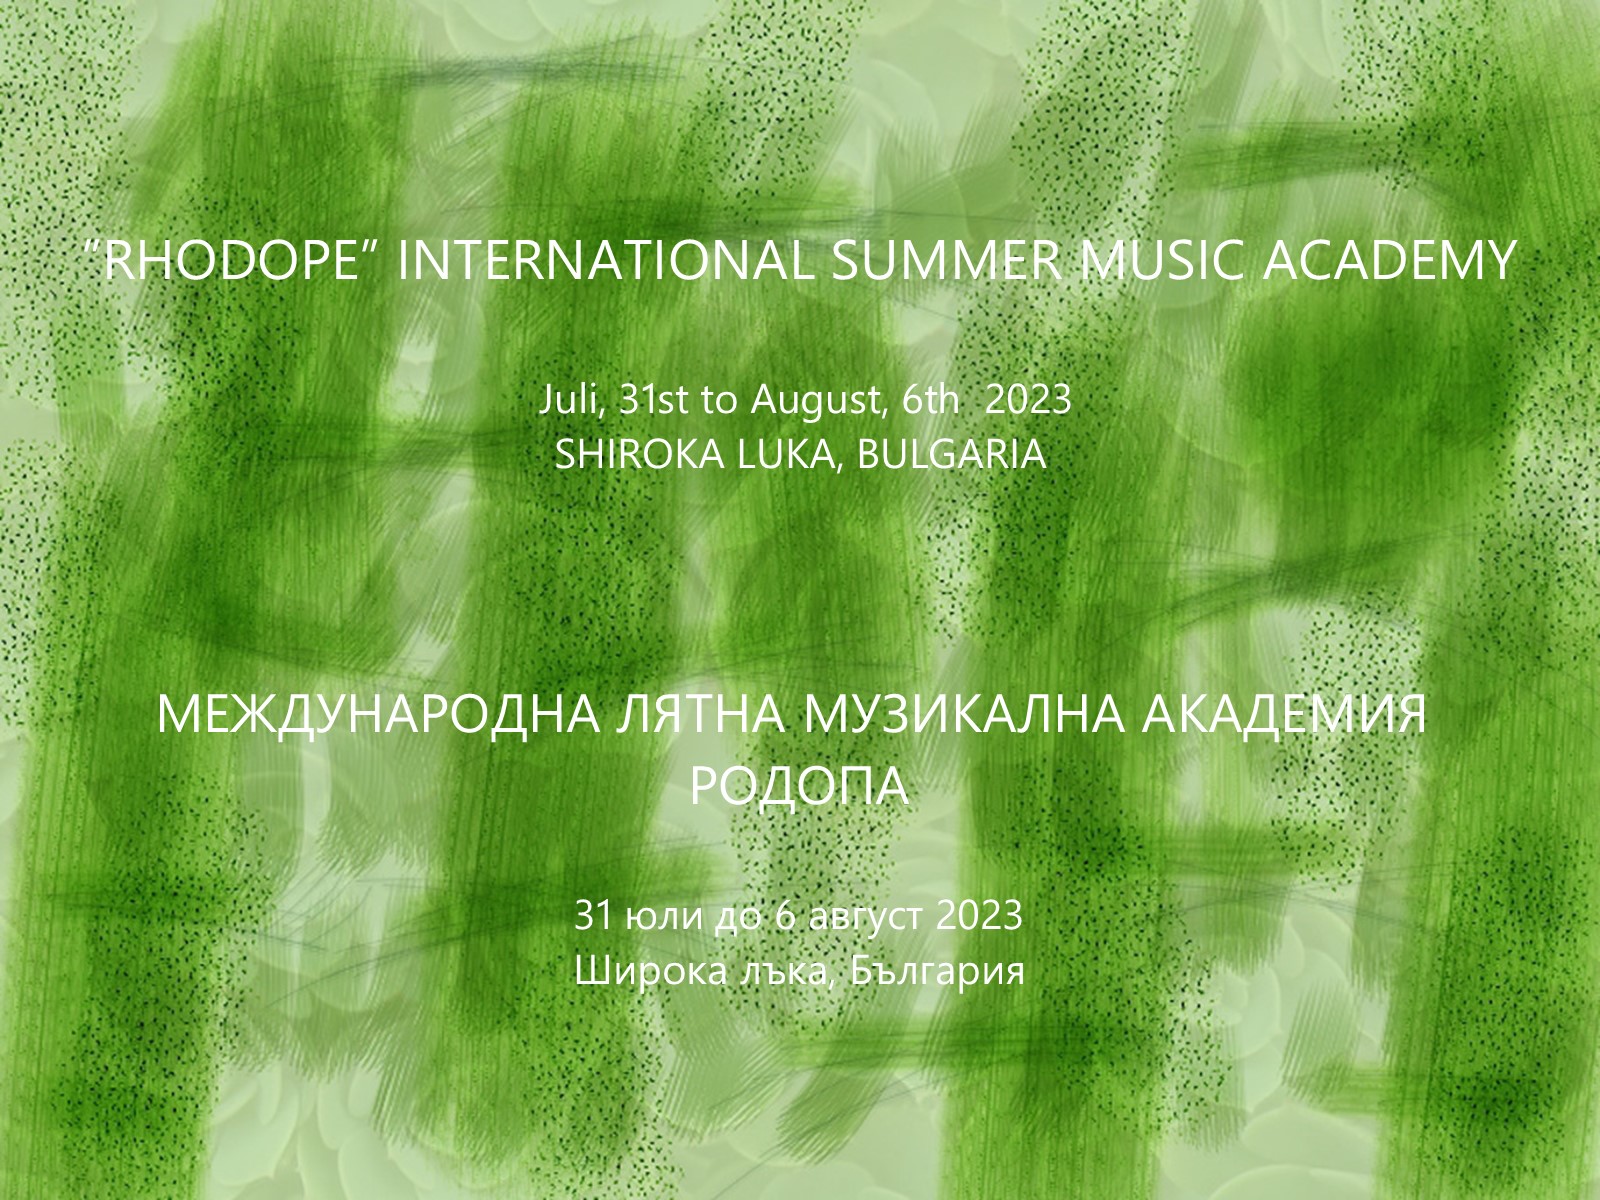 Rhodope International Summer Music Academy